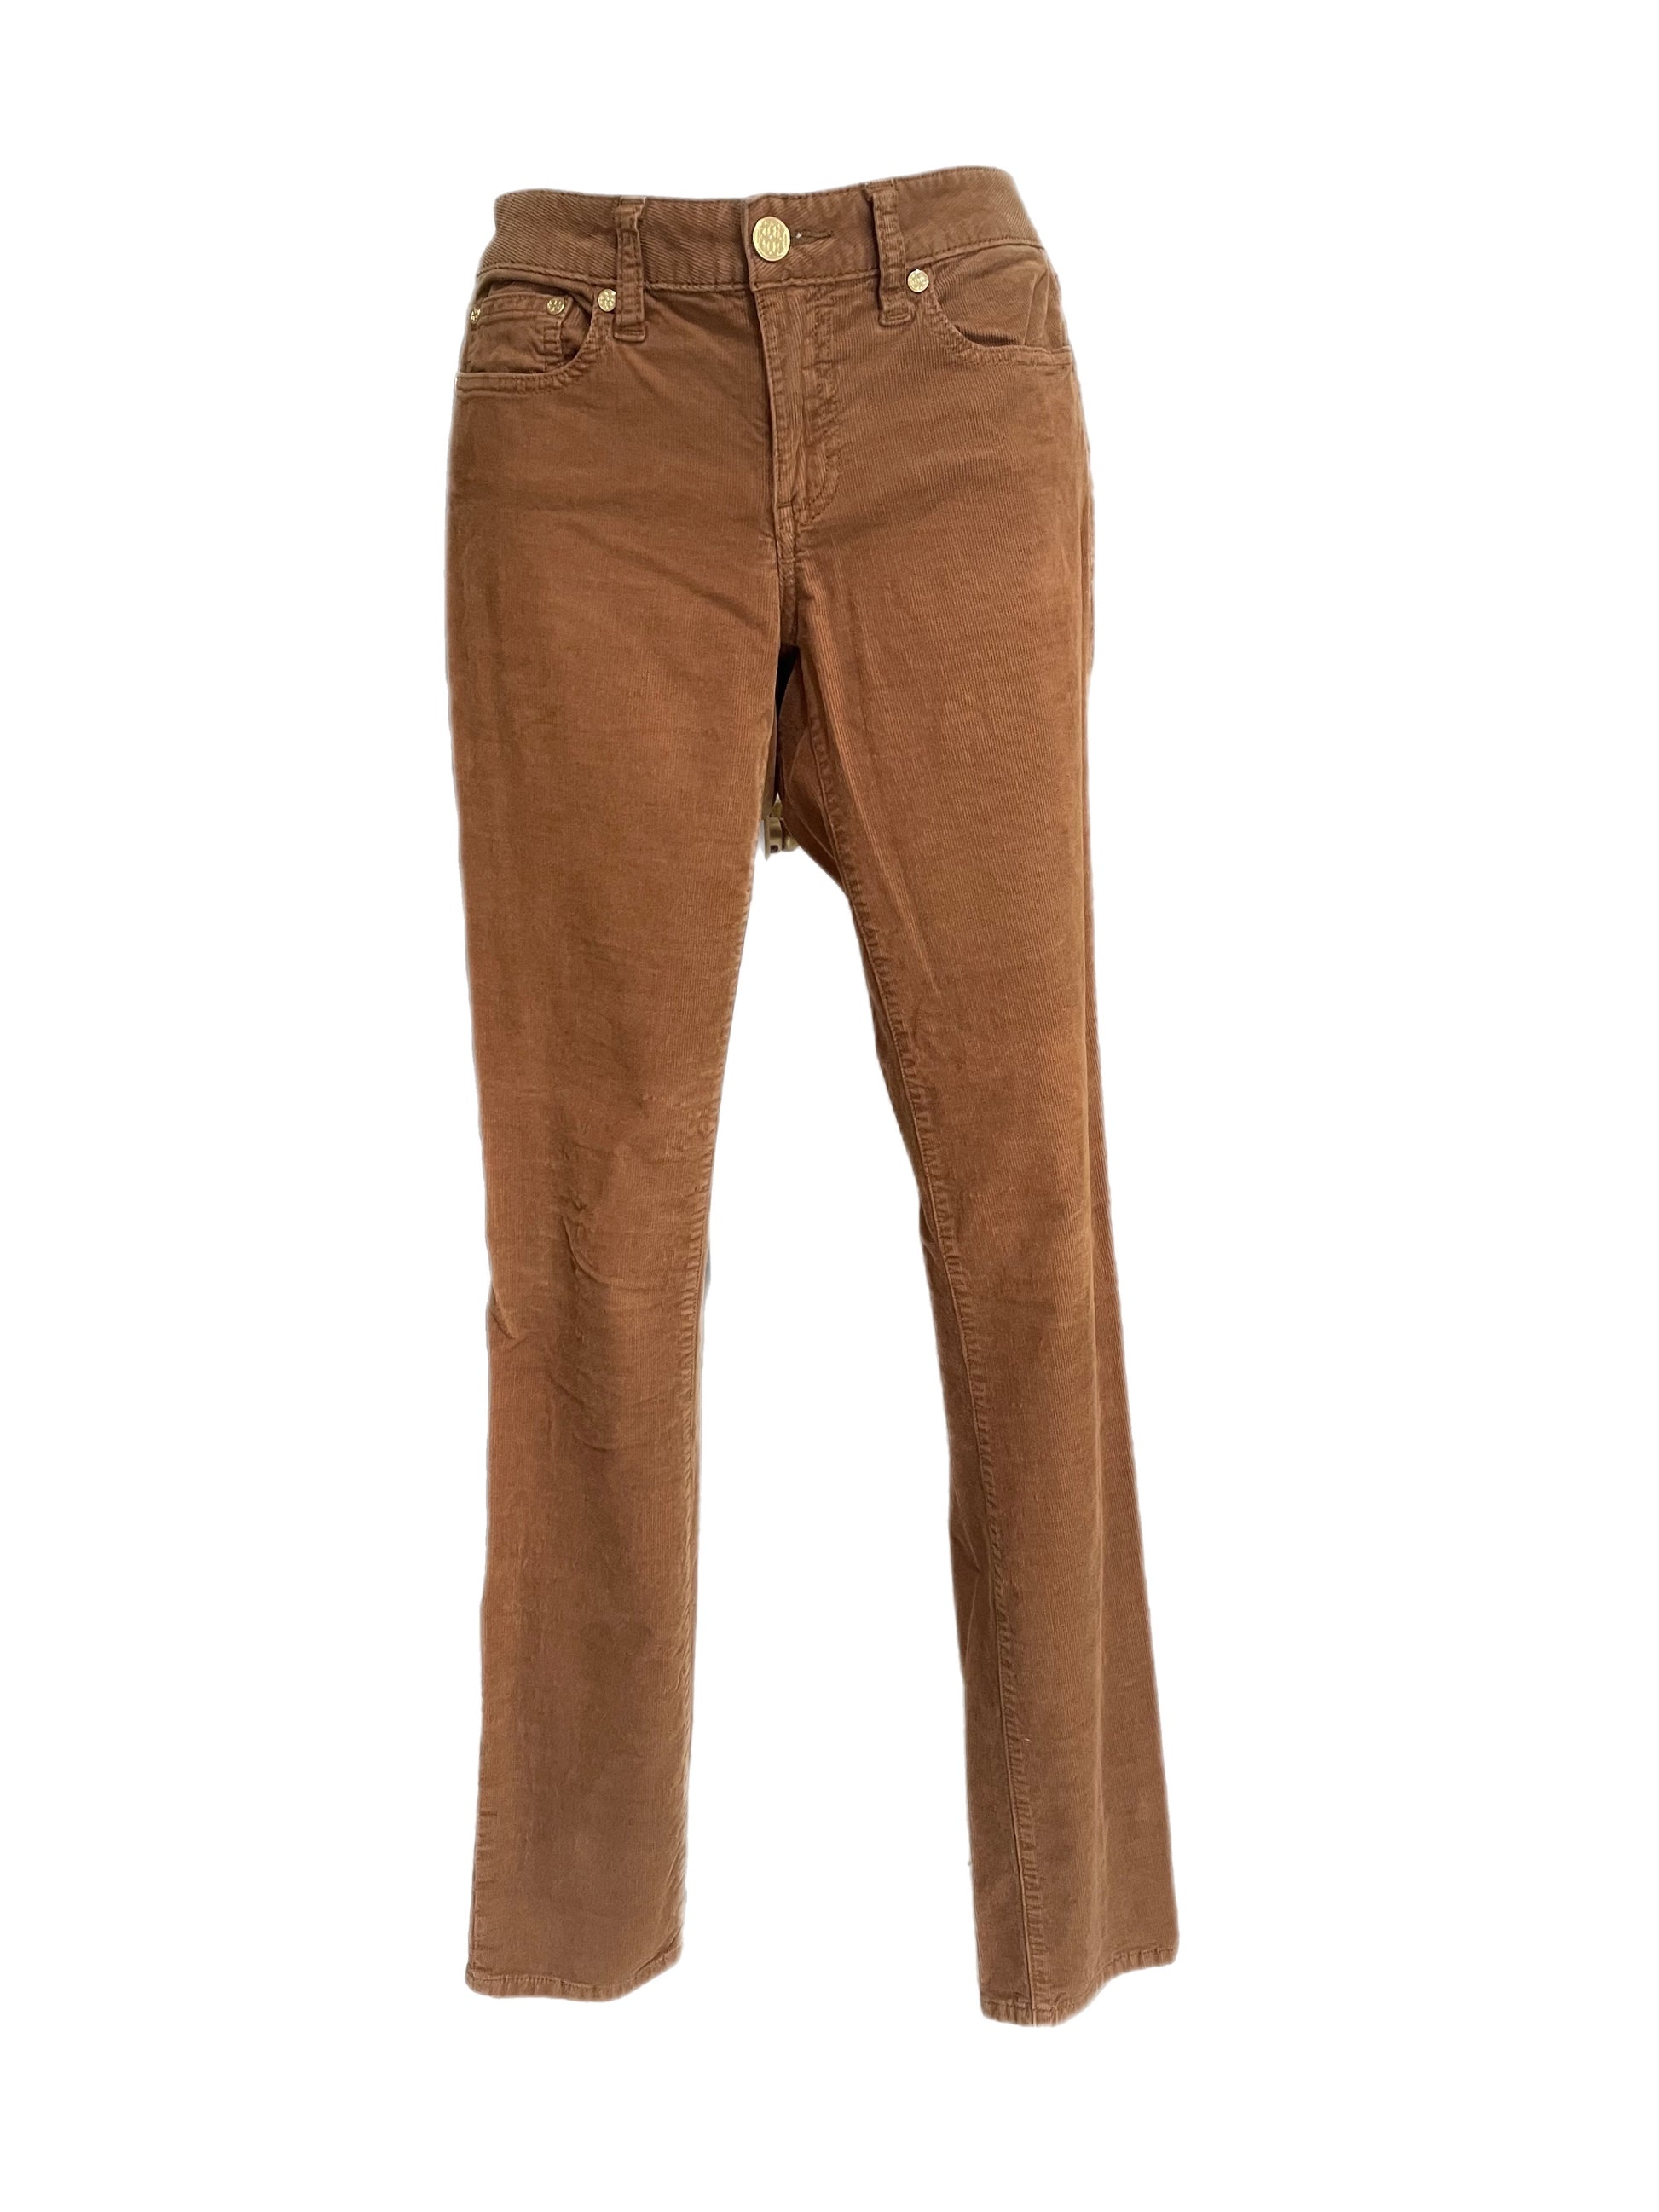 Tory Burch Classic Corduroy Brown Super Skinny Pant | The Skin Spot – The  Model Surgeon